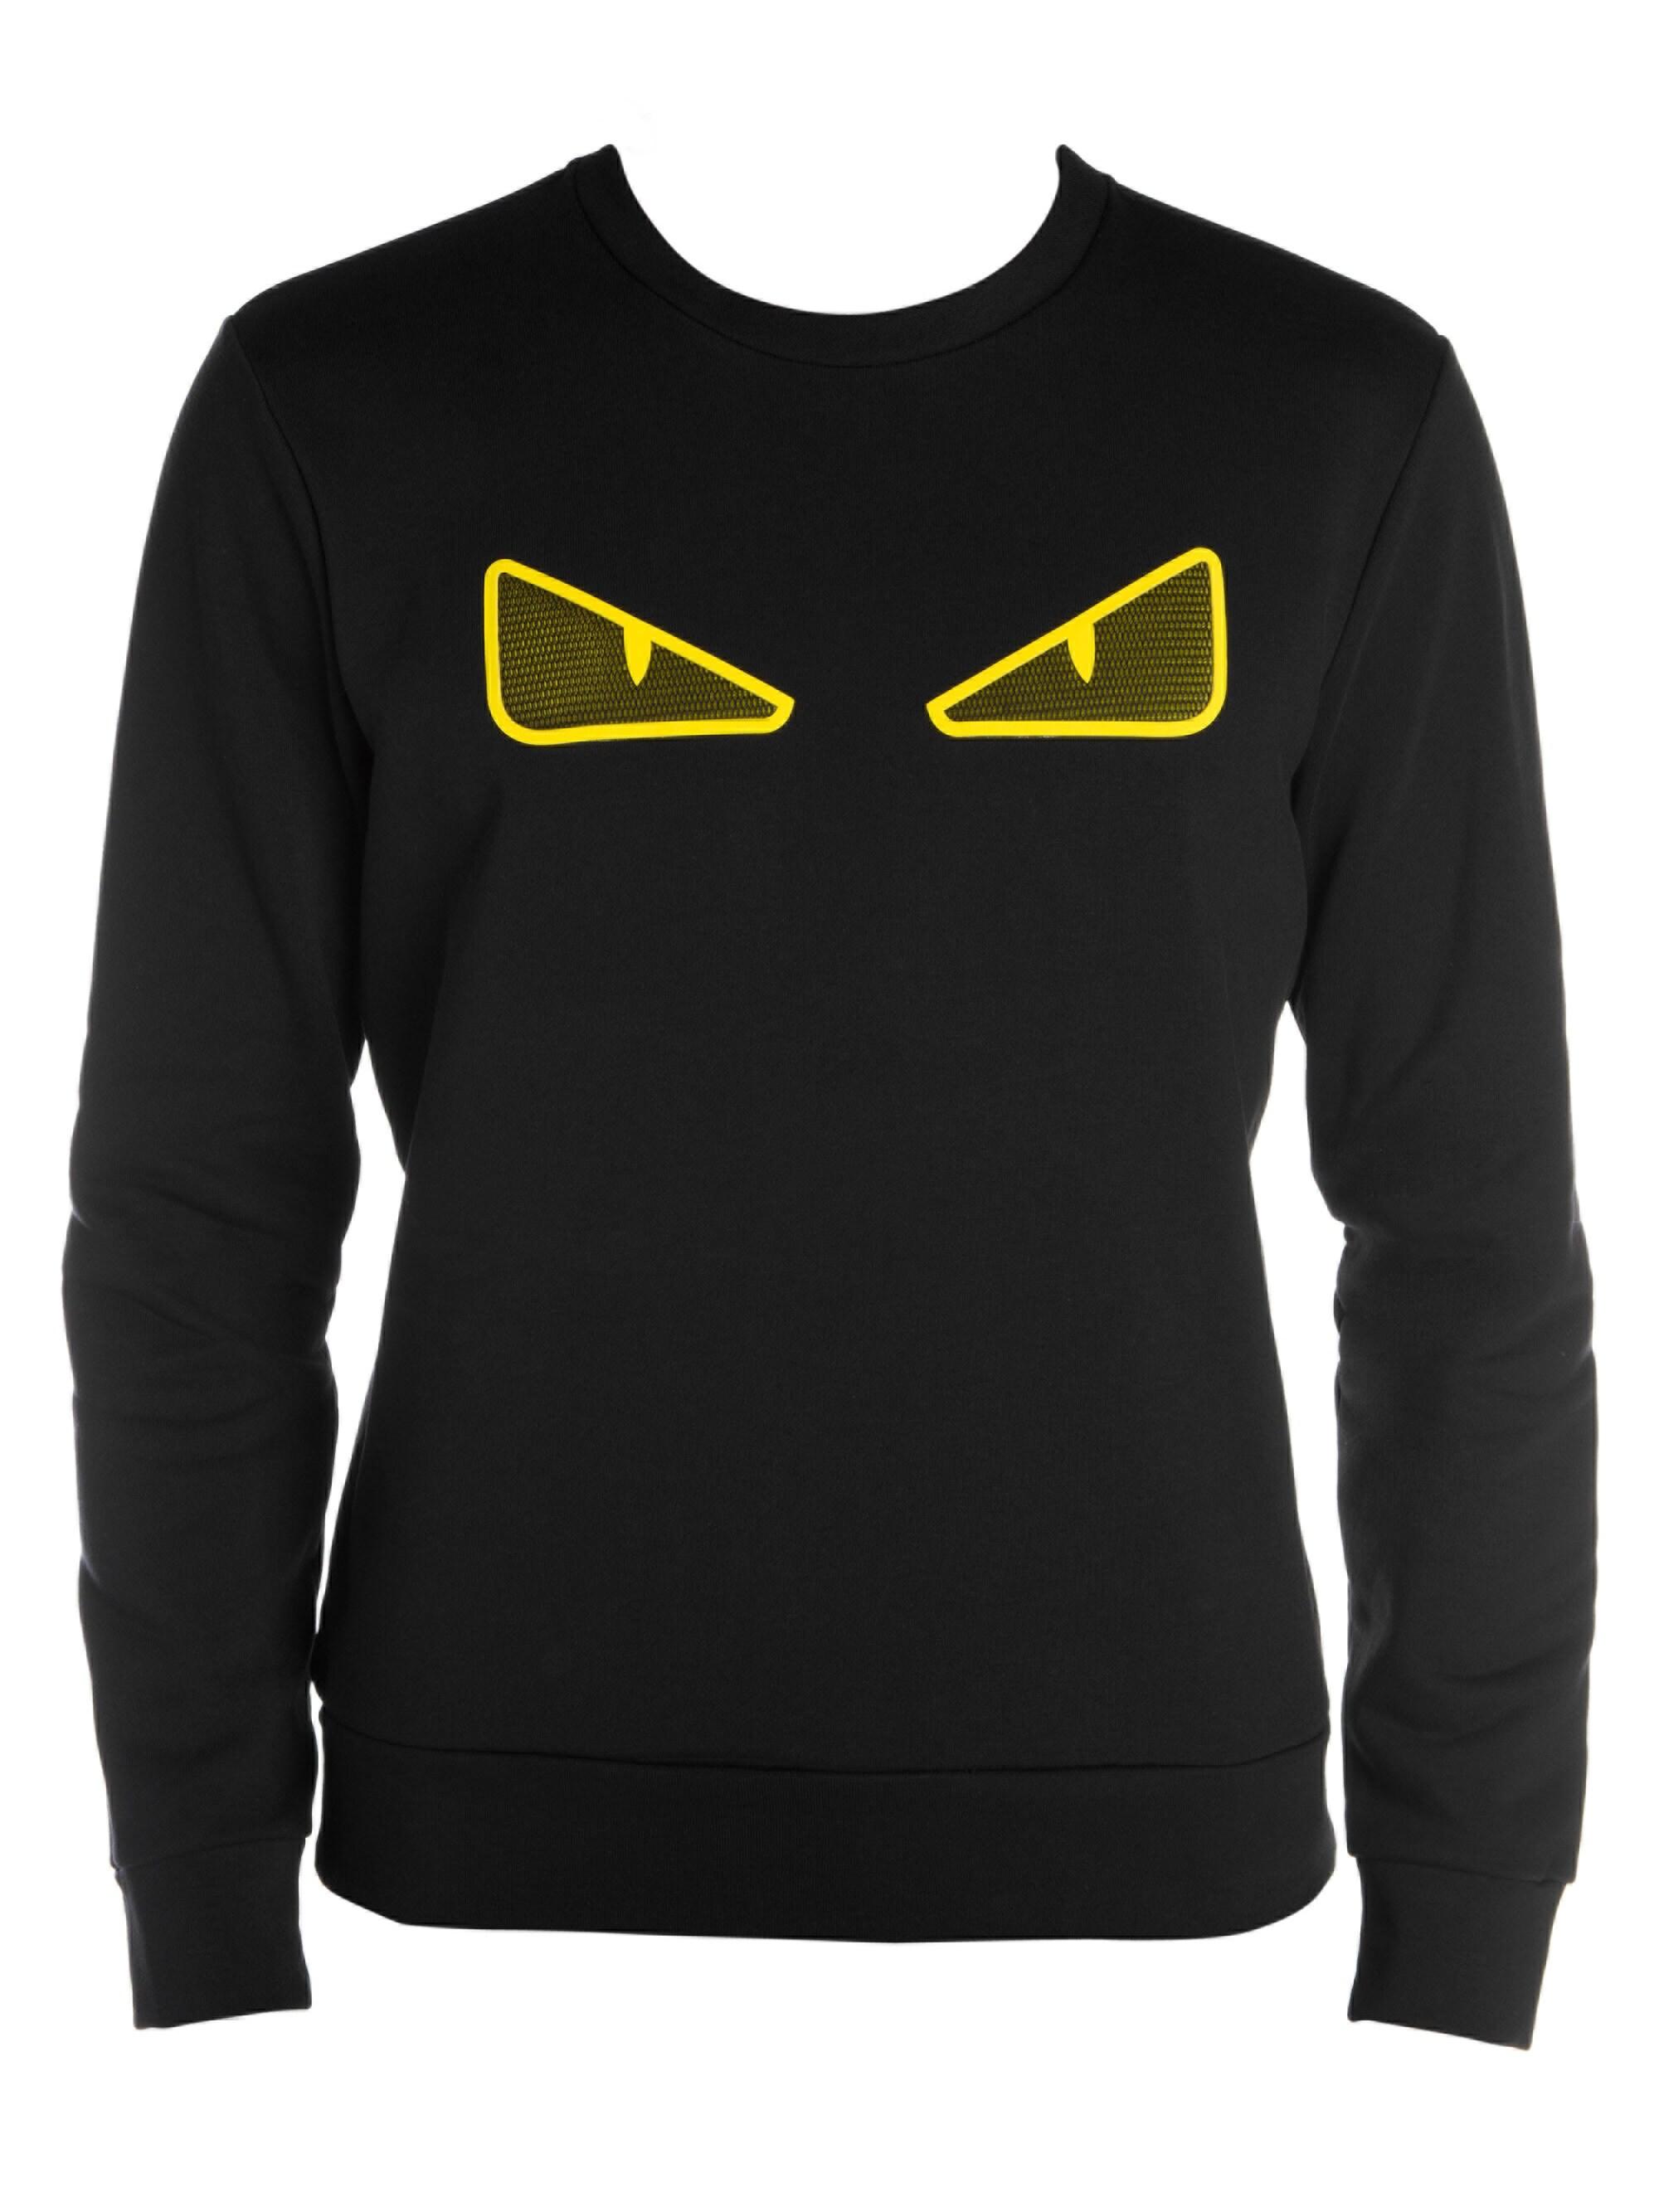 Fendi Fluorescent Eyes Crewneck Sweatshirt in Black for Men - Lyst